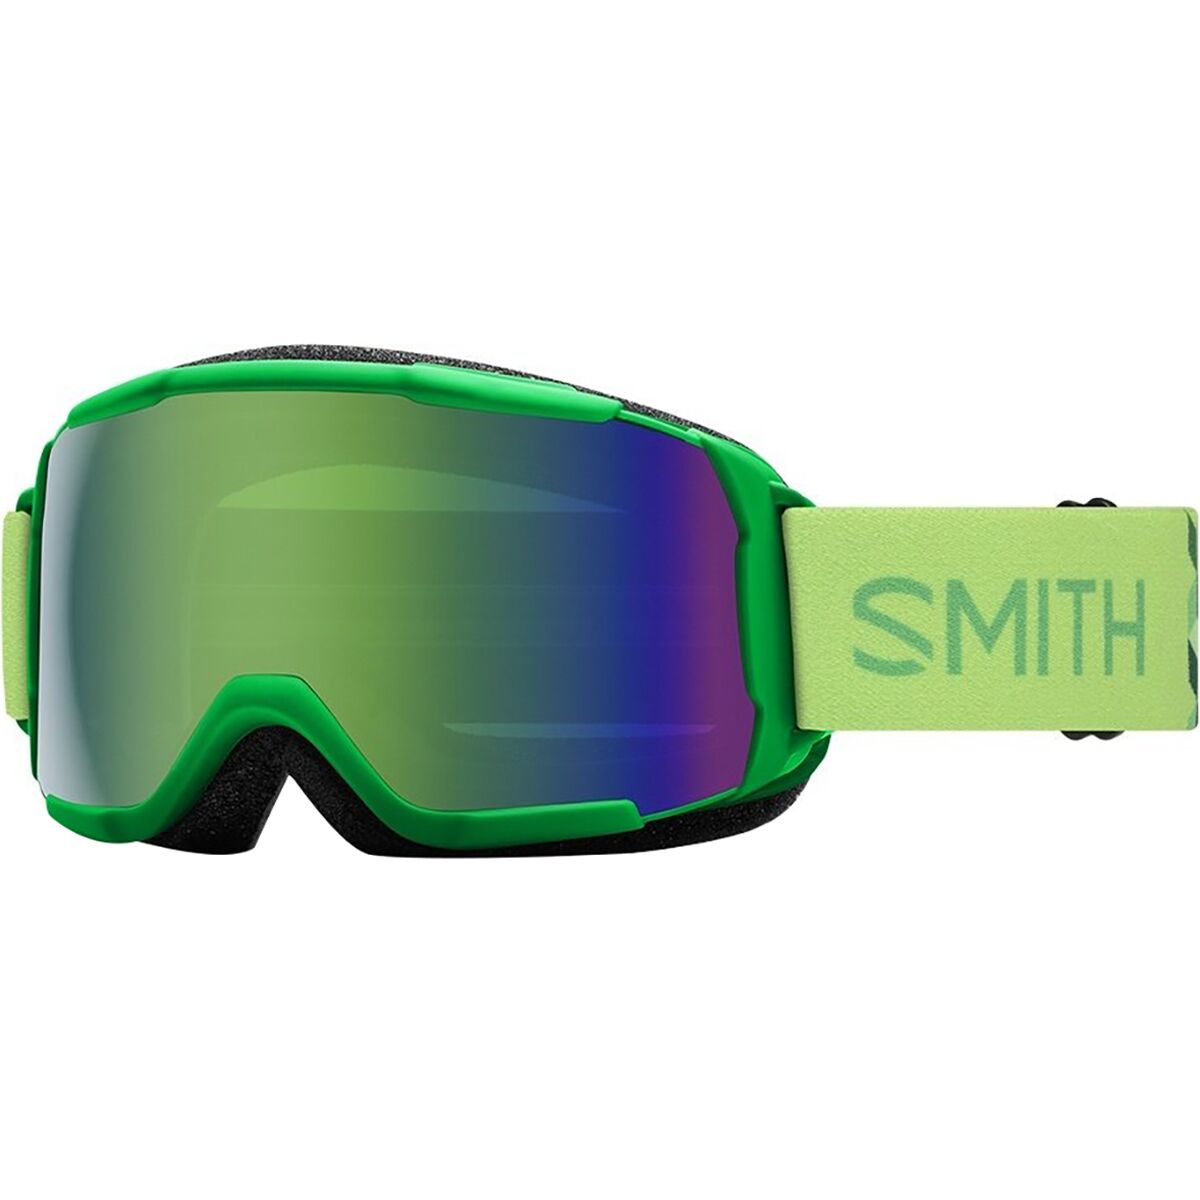 Smith Grom ChromaPop Goggles - Kids' Slime Watch Your Step/Gree Sol-X Mirror